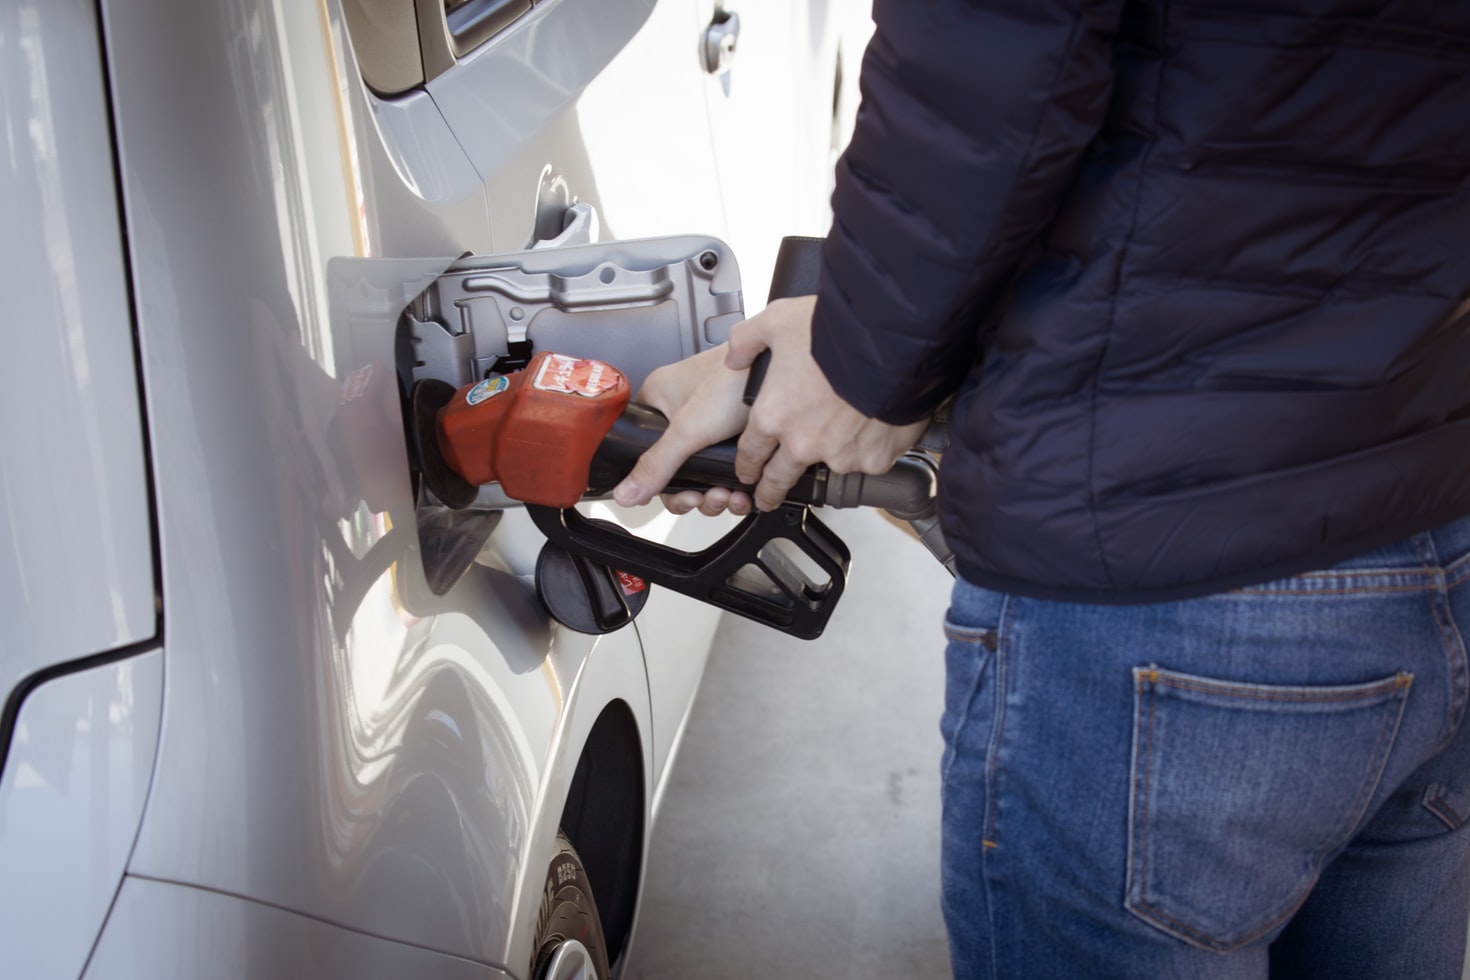 Mas, afinal, carro a gás vale a pena? Fonte: Unsplash.